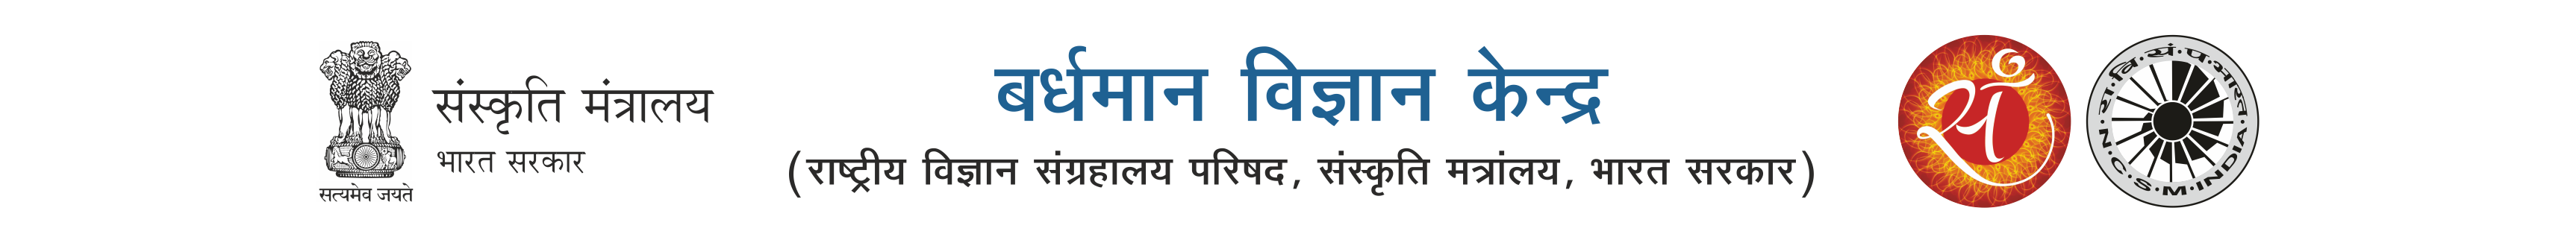 Bardhaman Hindi Banner